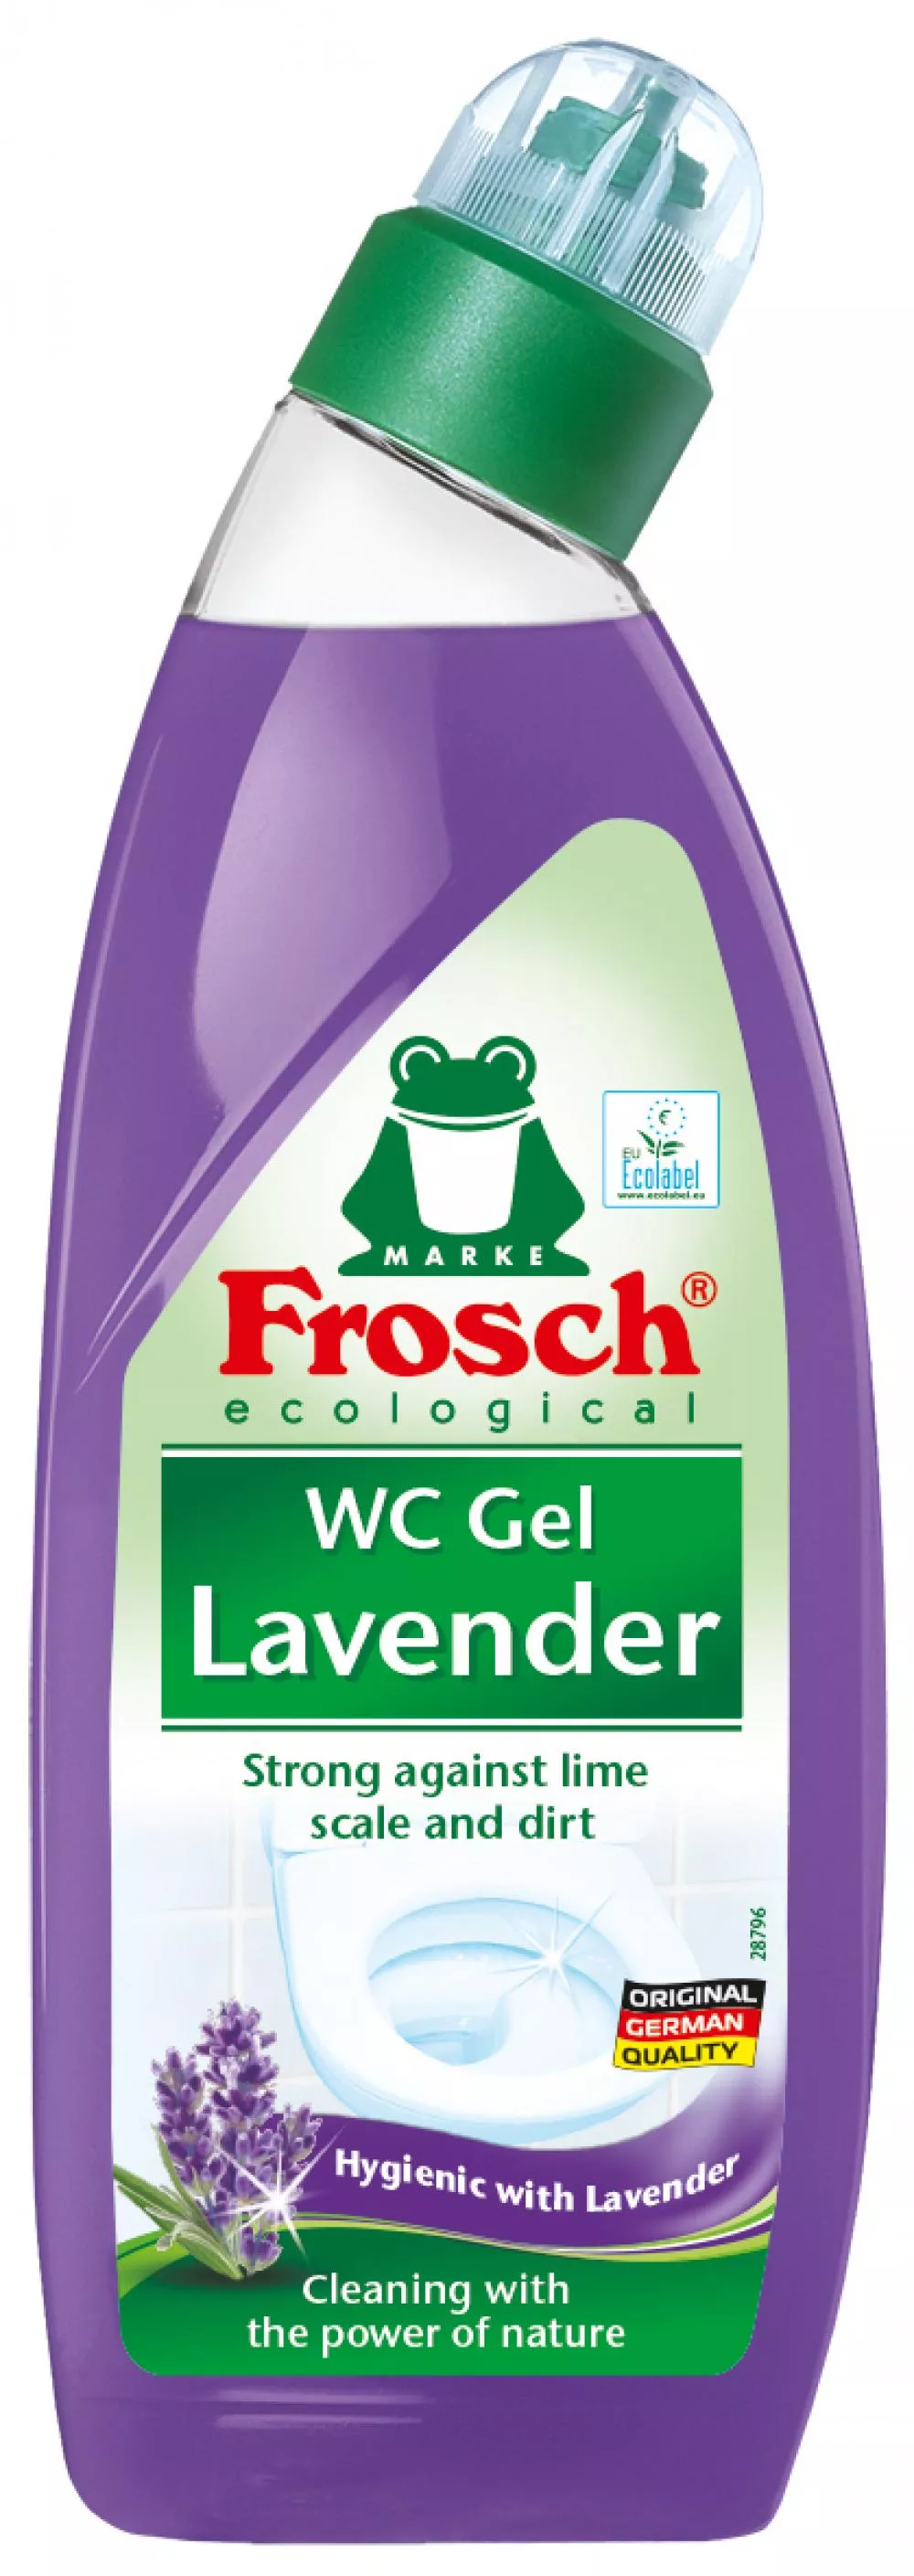 Frosch Lavendel toilet gel (ECO, 750ml)